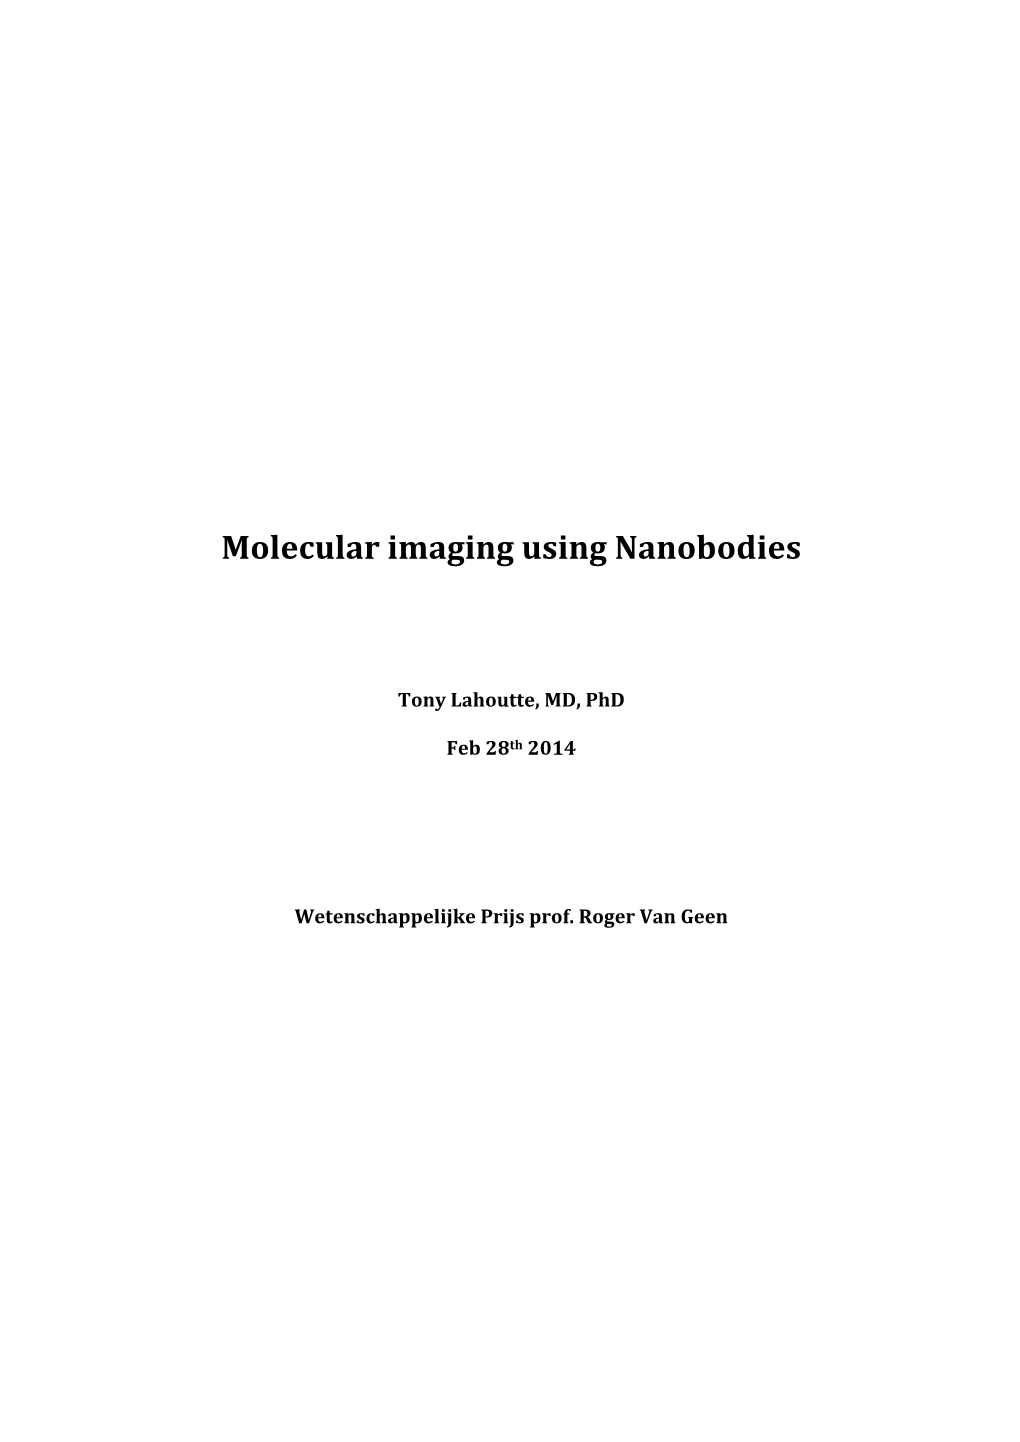 Molecular Imaging Using Nanobodies